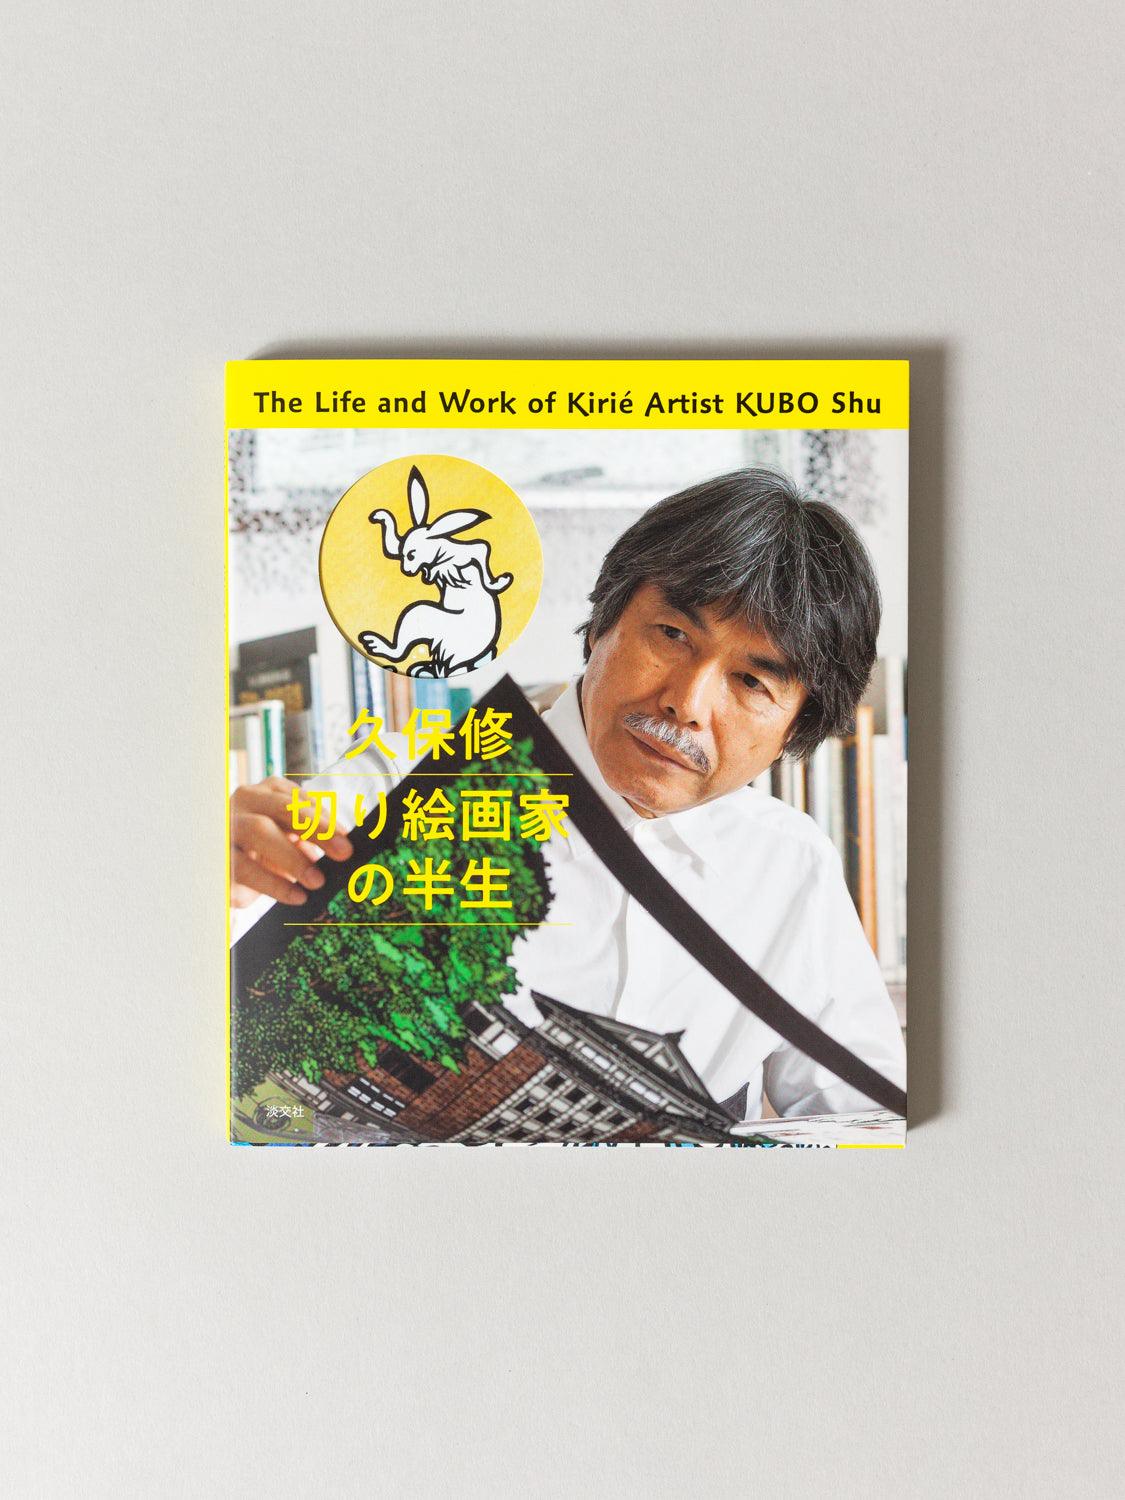 The Life and Work of Kirie Artist Kubo Shu (with English Translation)